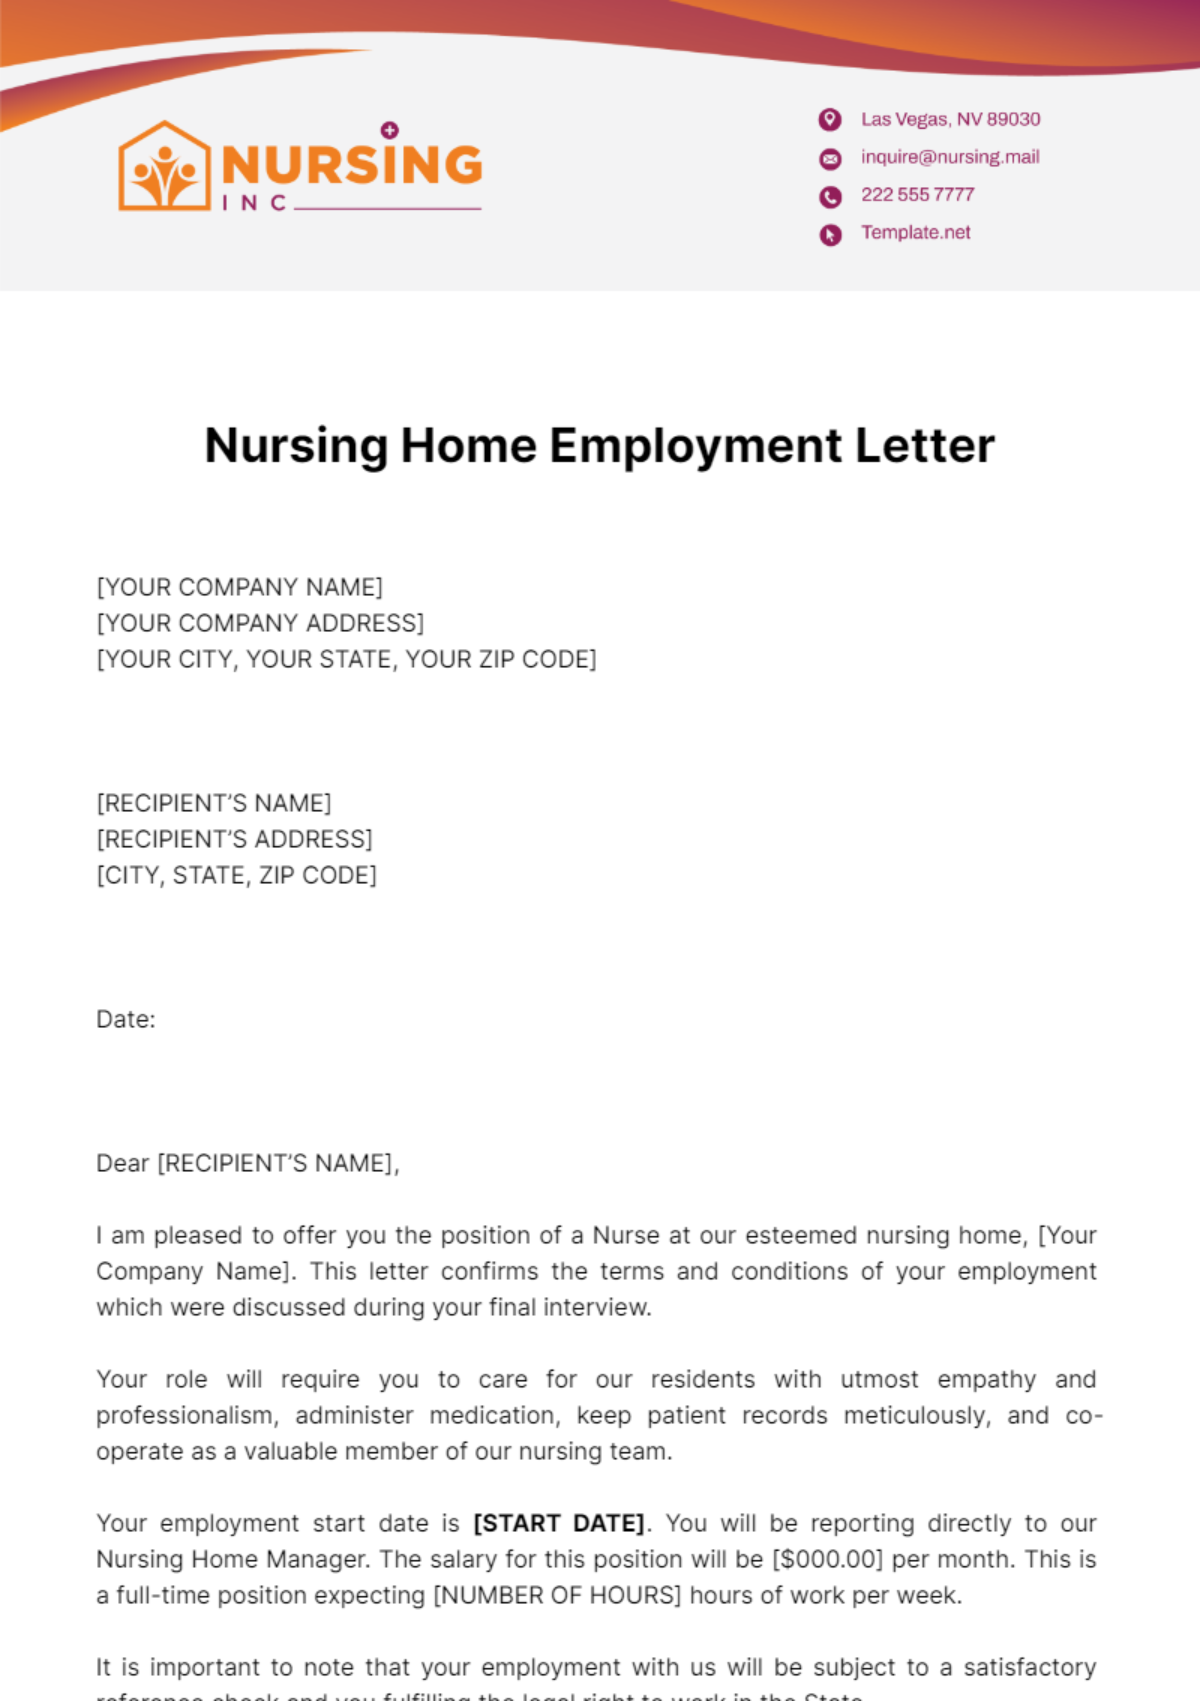 Nursing Home Employment Letter Template